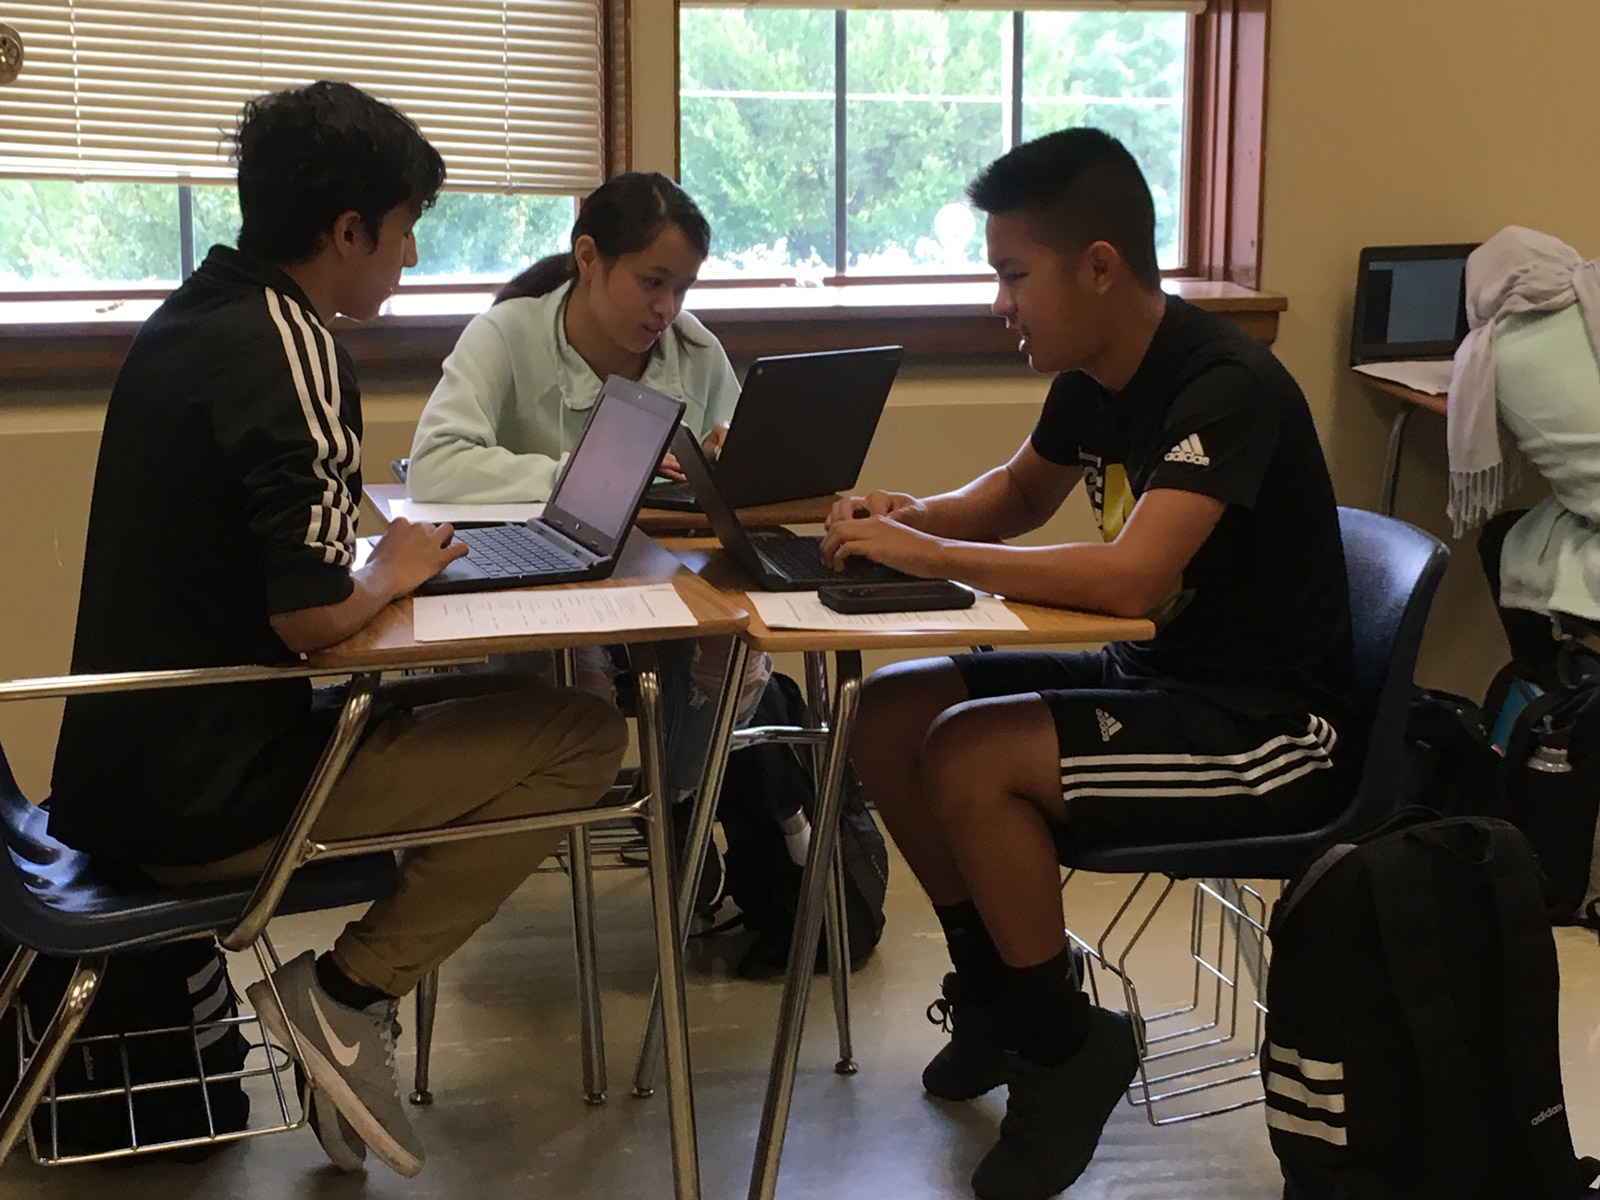 Students work on homework on laptop computers